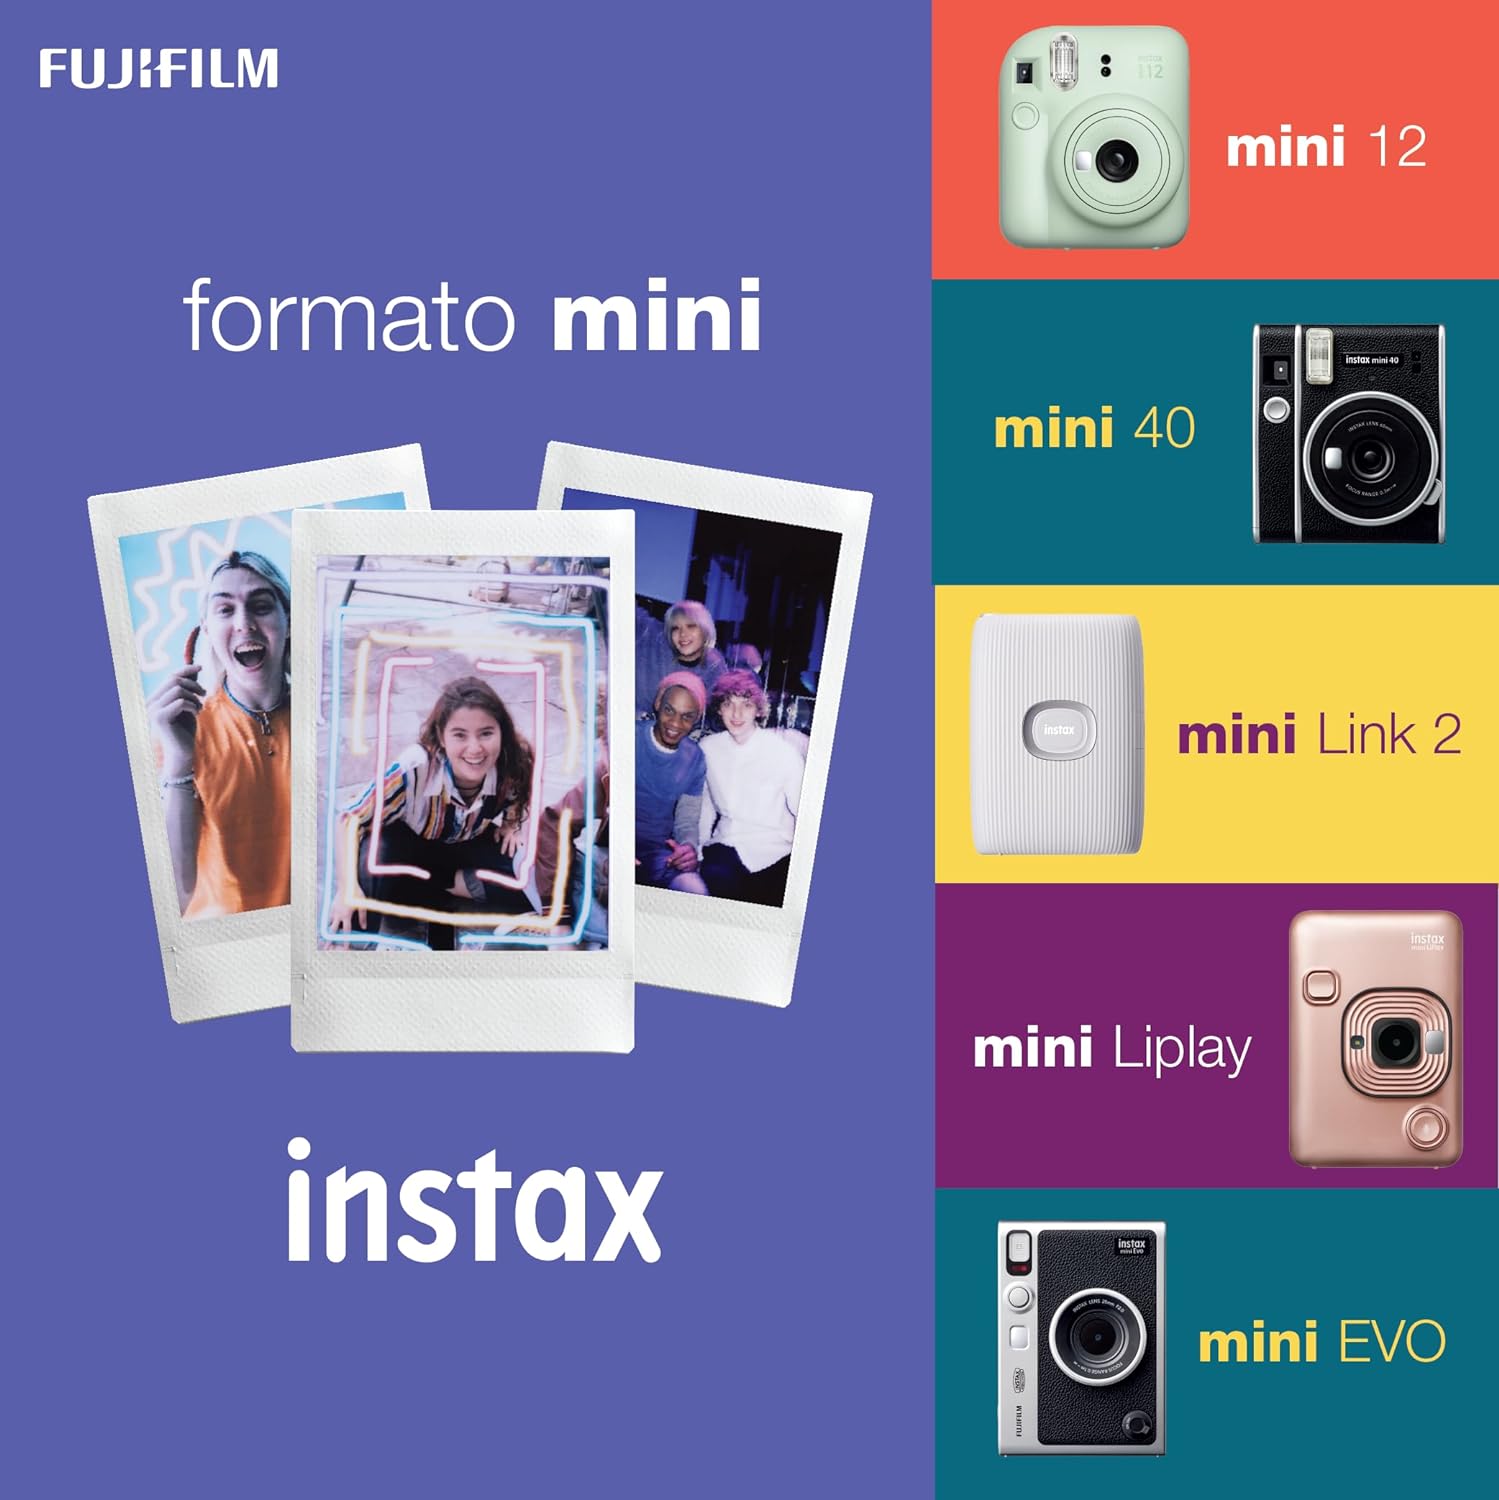 Fujifilm Instax Mini, 10 Sheet X 2 Pack, White